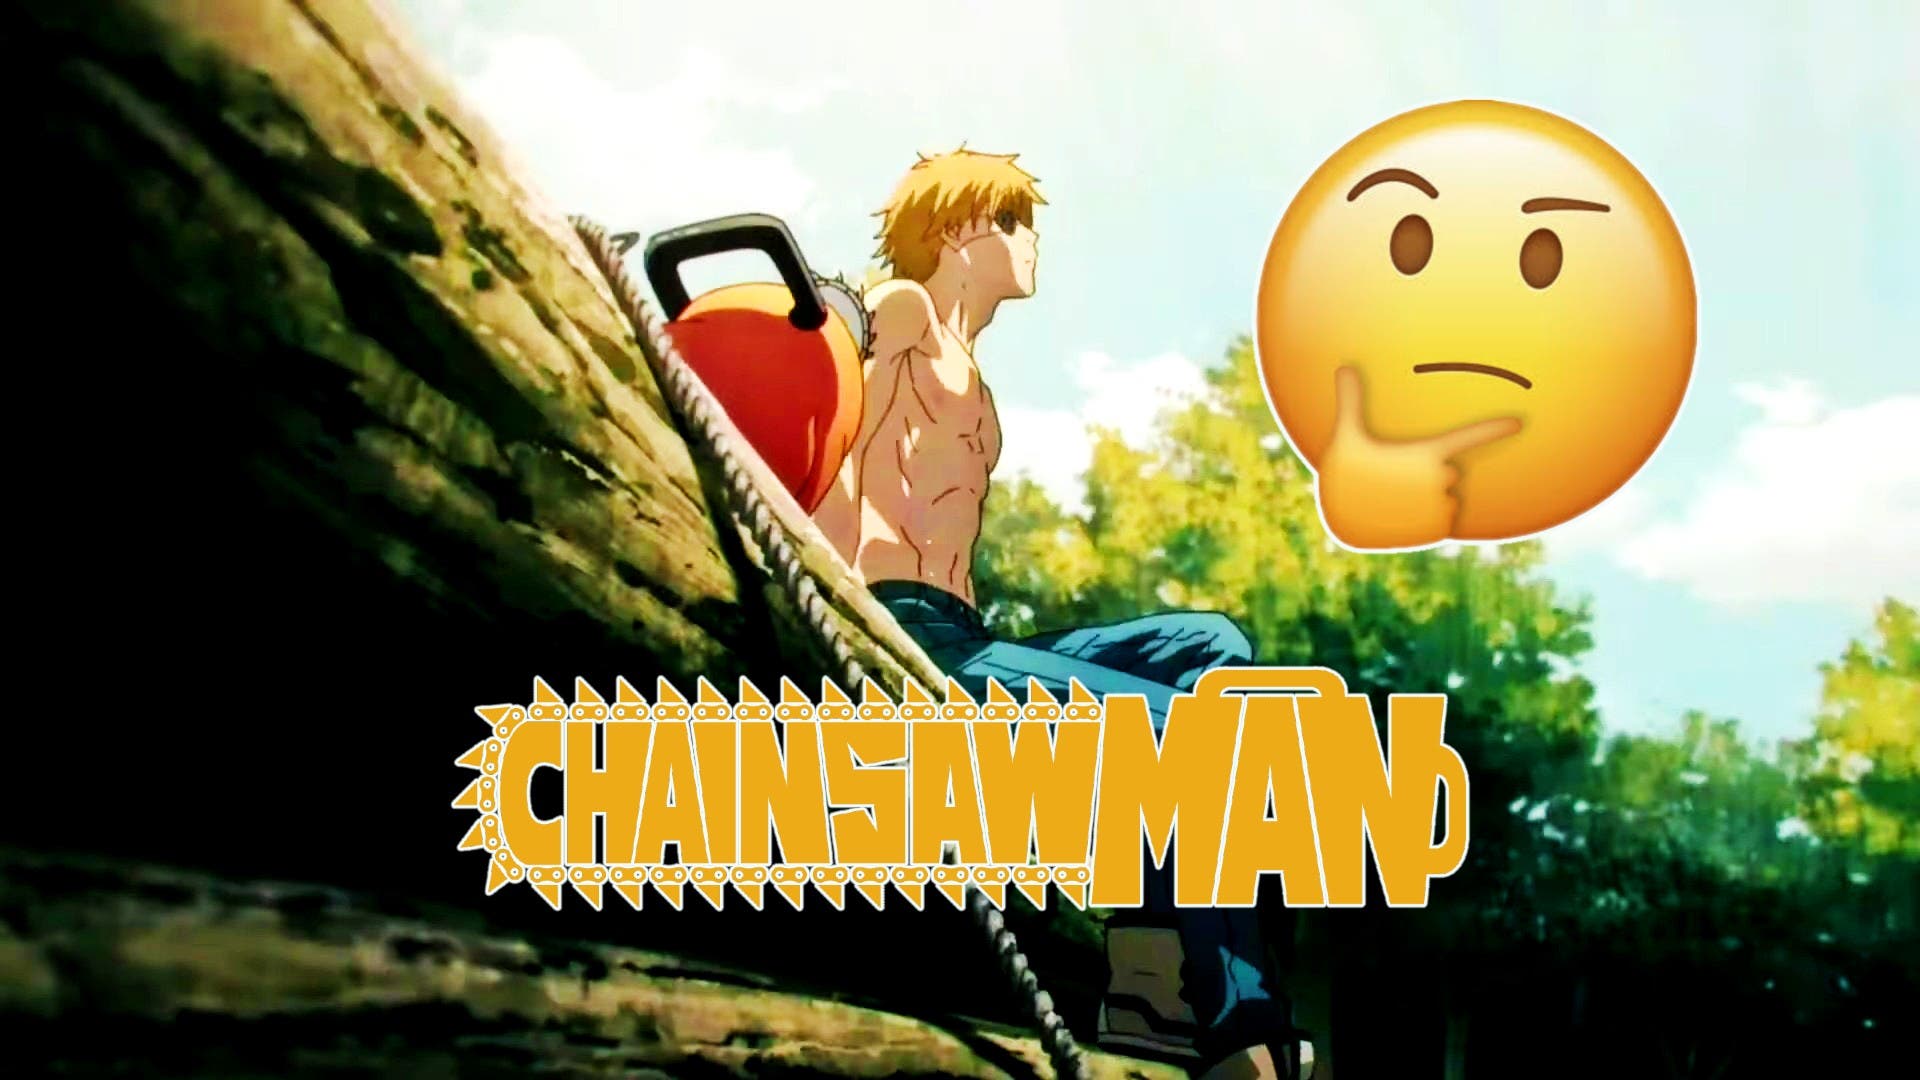 Chainsaw Man Capitulo 3 Full HD Sub Español, By Ataque Alos titanes